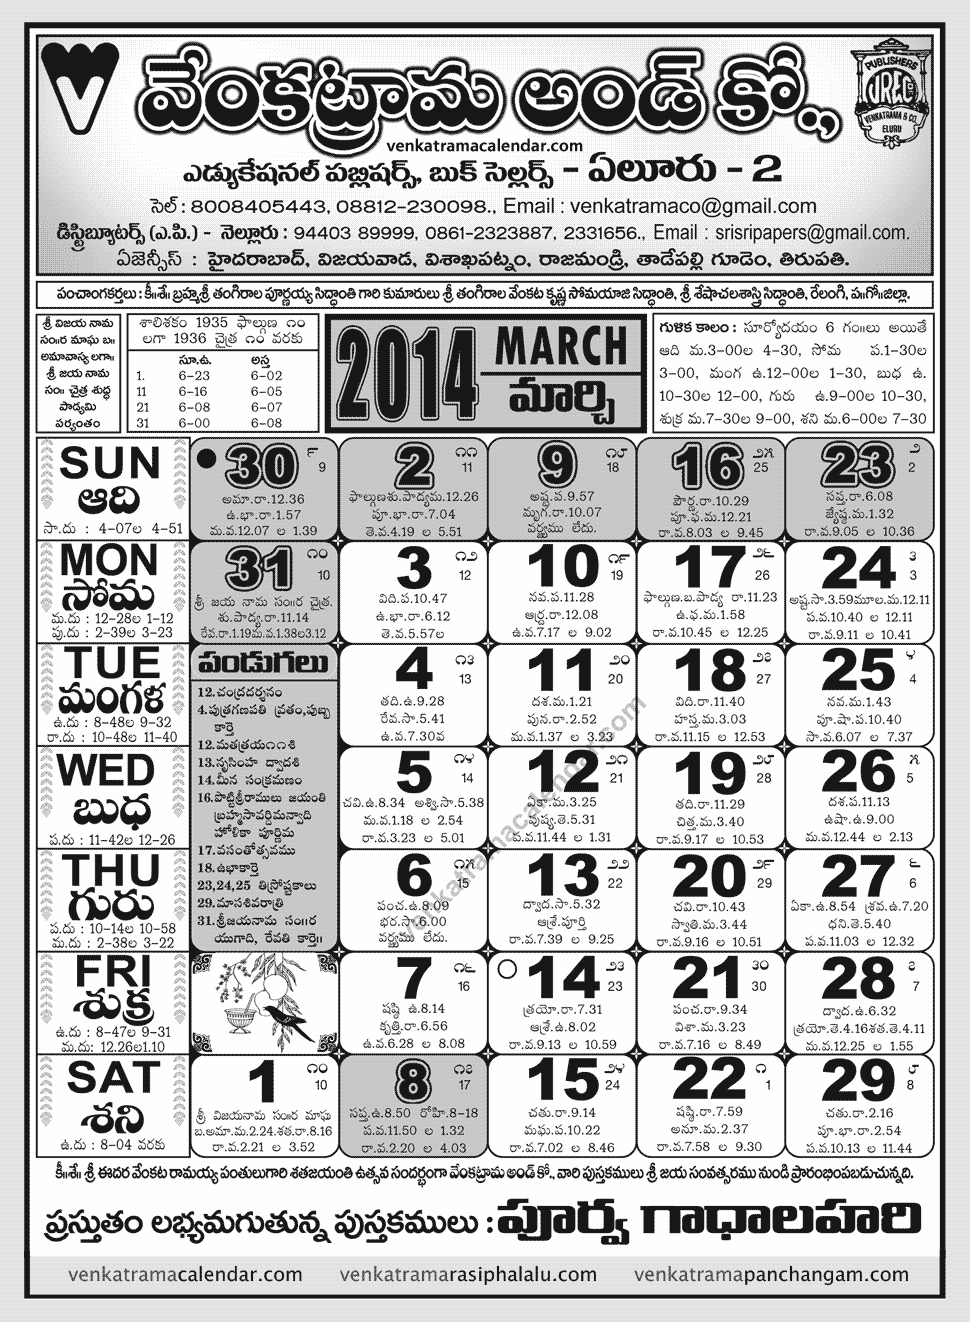 venkatrama-co-calendar-2014-march-2014-telugu-calendar